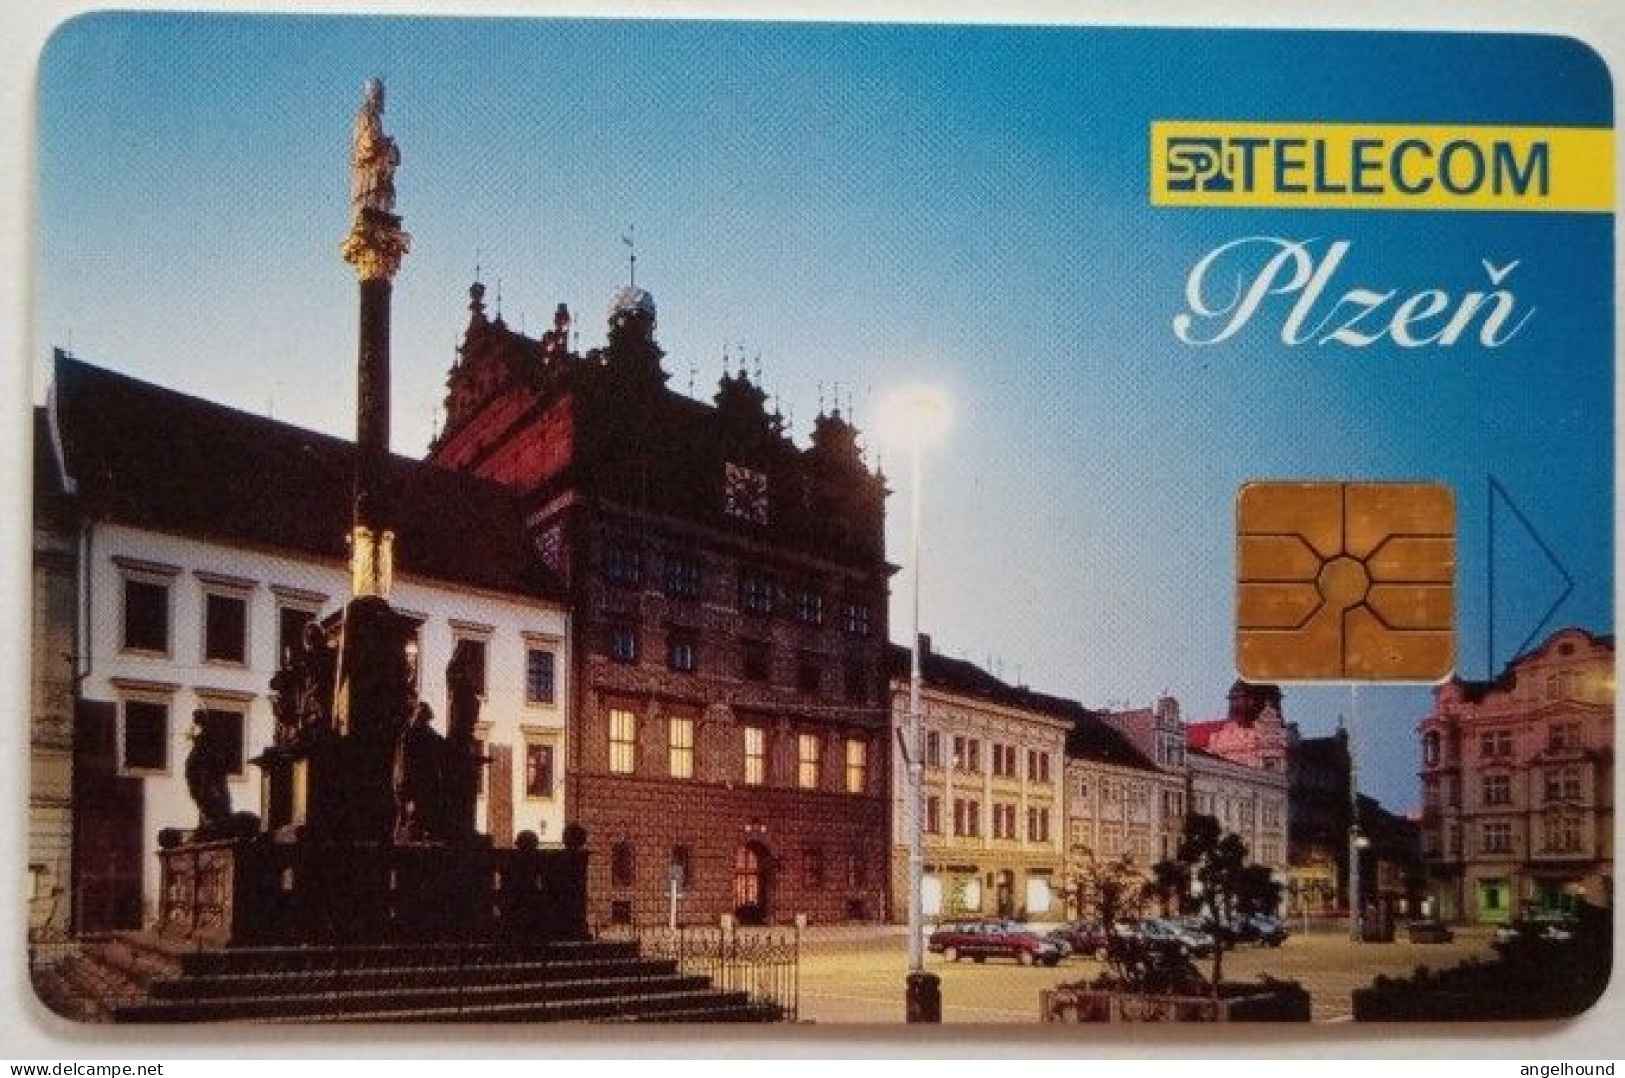 Czech Republic 50 Units Chip Card - Town Plzen - Czech Republic